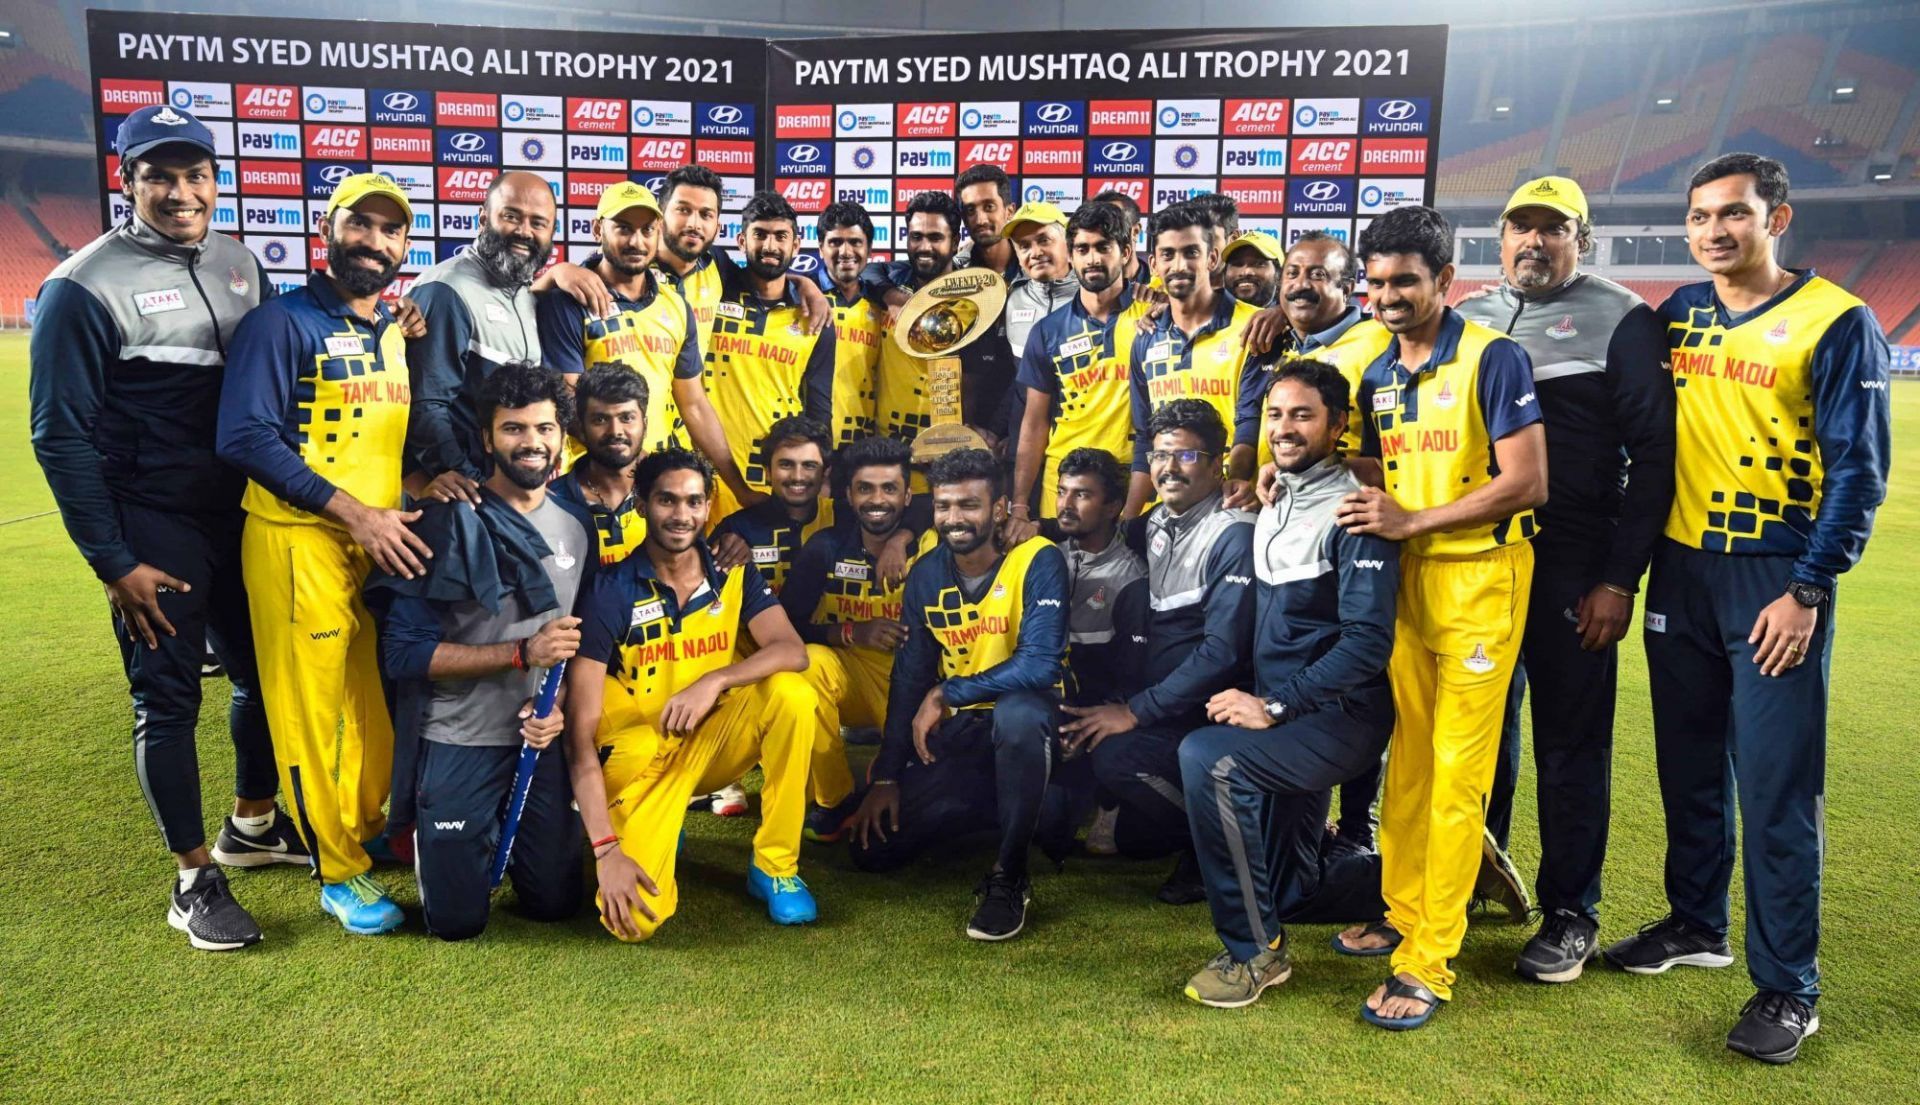 Tamil Nadu team after winning SMAT 2020. (Image: BCCI)